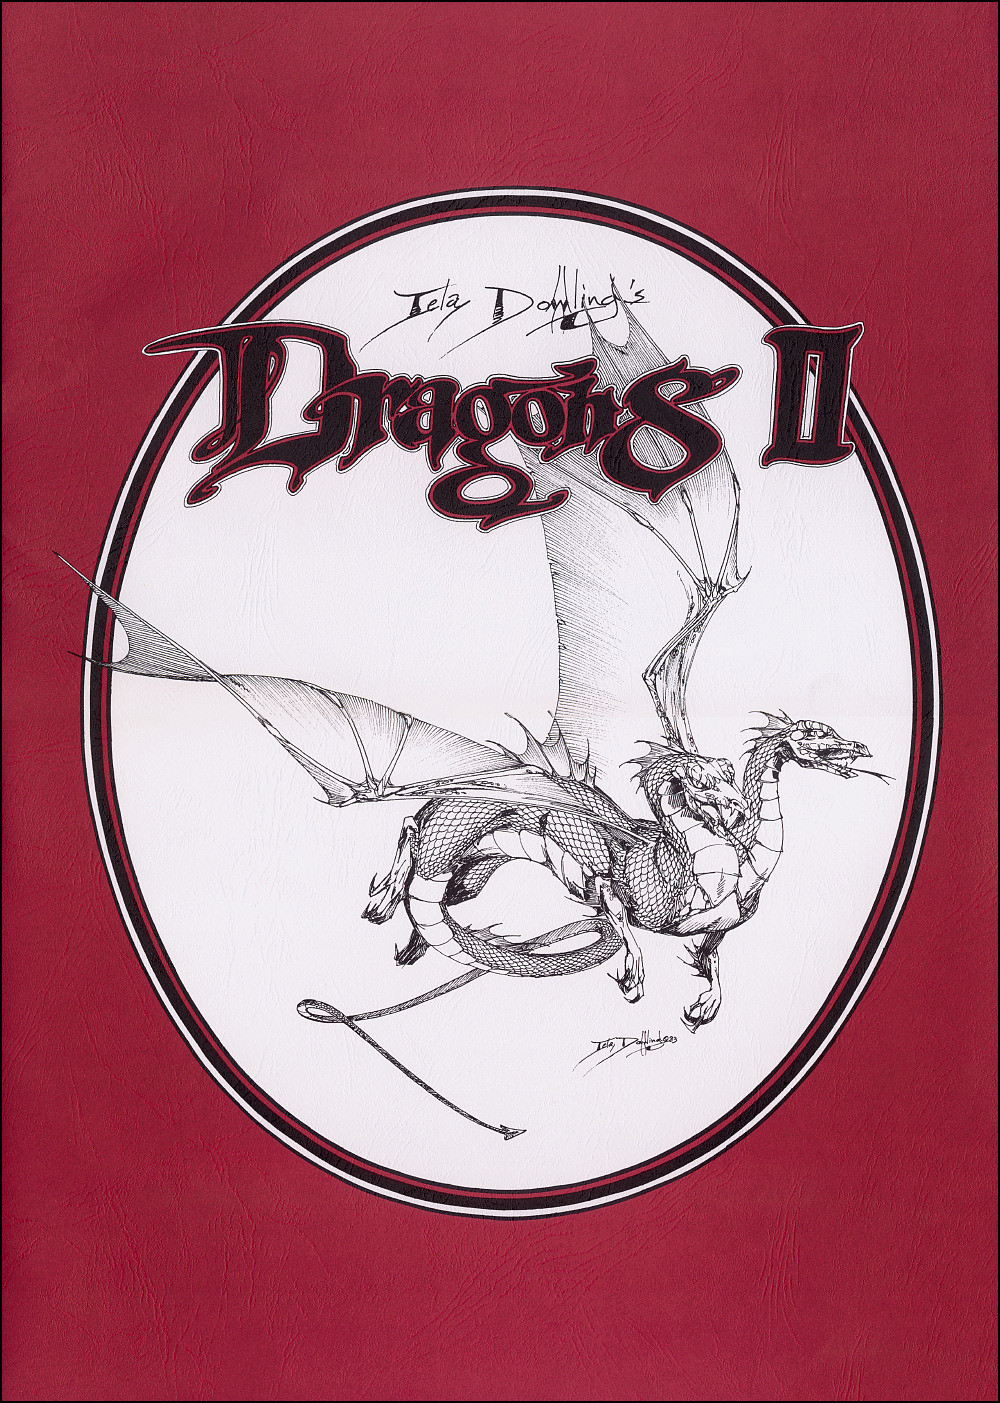 Lela-Dowling-Dragons-Ll-Cover